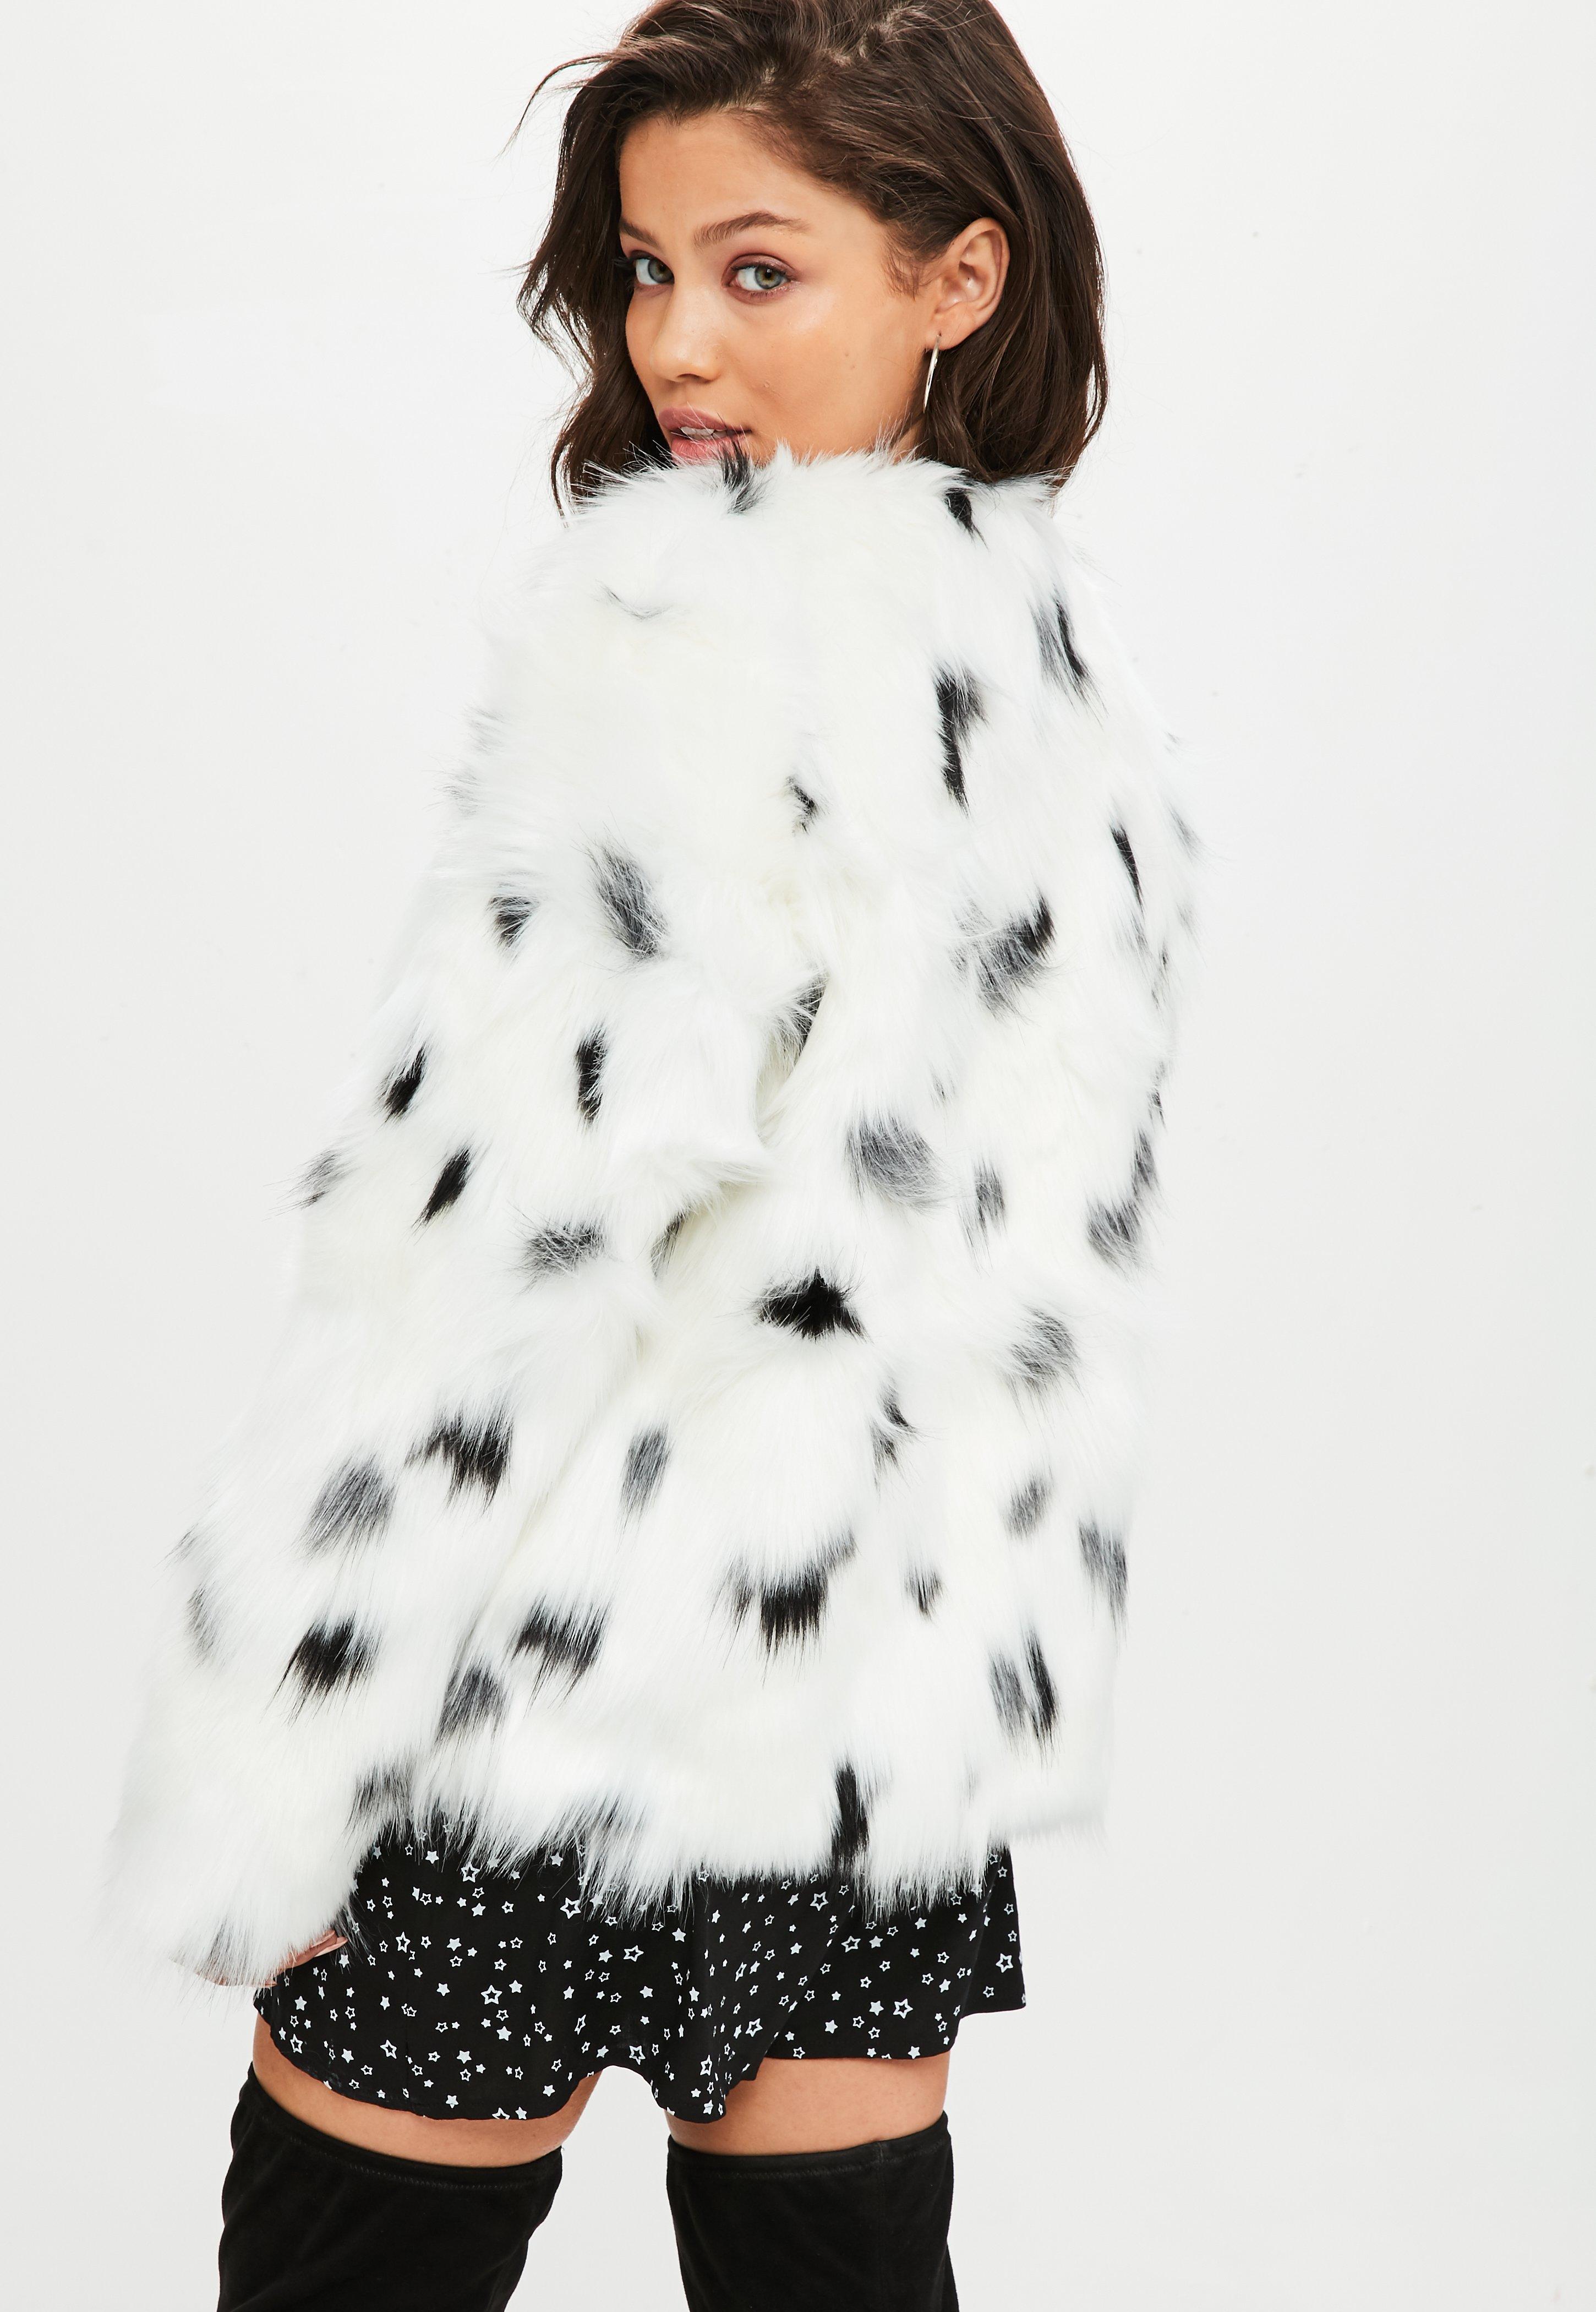 Snow Leopard Fur Coats - Tradingbasis